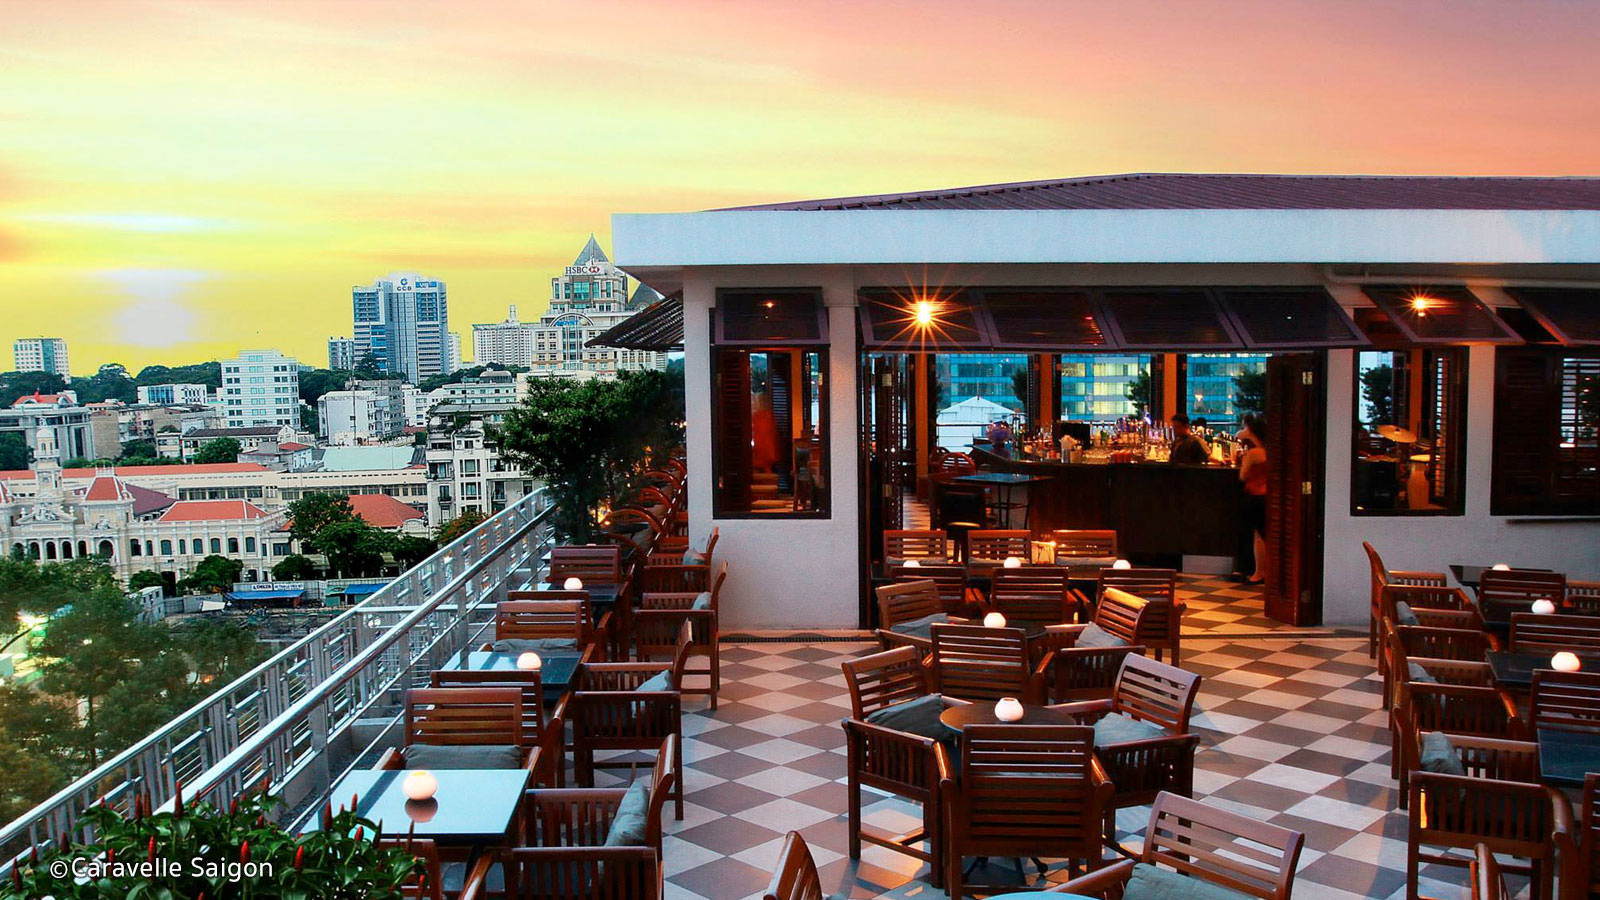 The Hotel Review: Caravelle Saigon, Ho Chi Minh City, Vietnam